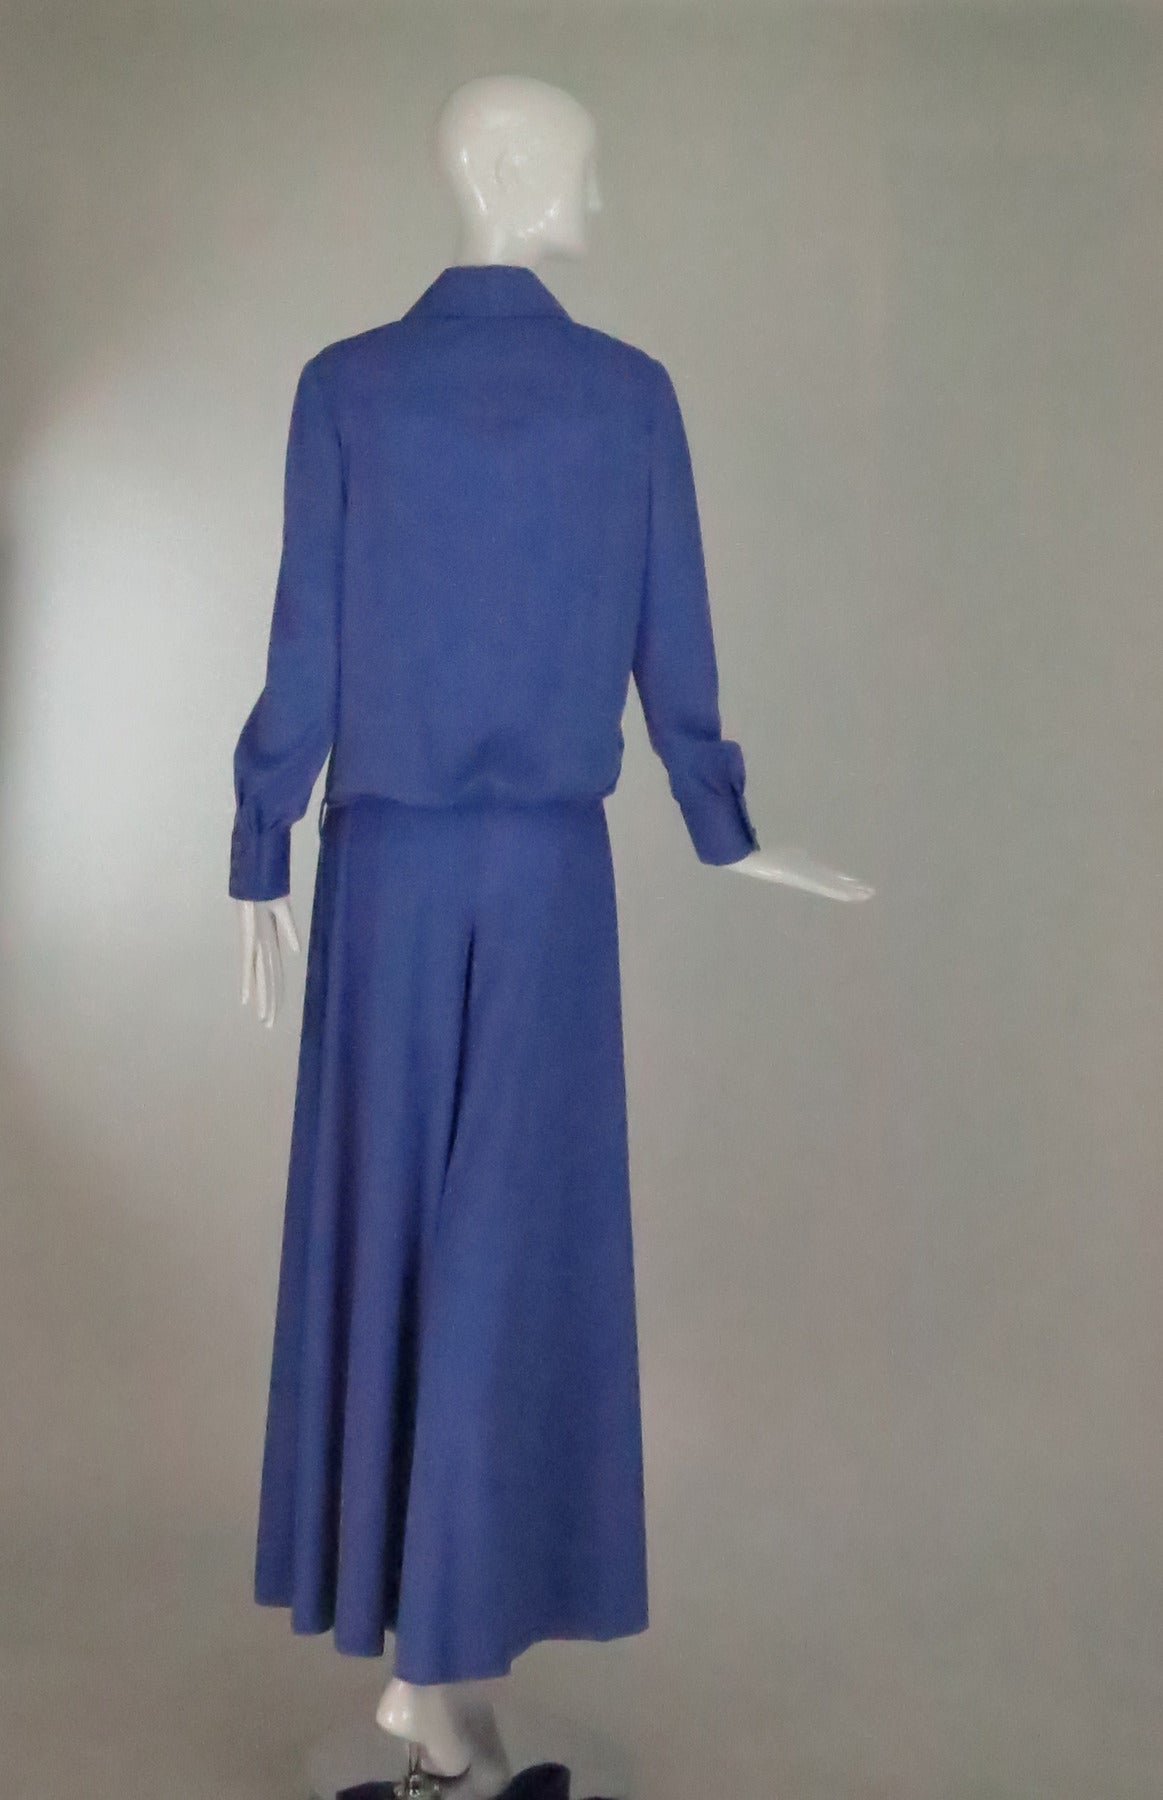 Women's 1970s Geoffrey Beene palazzo pant set in silky hyacinth blue knit